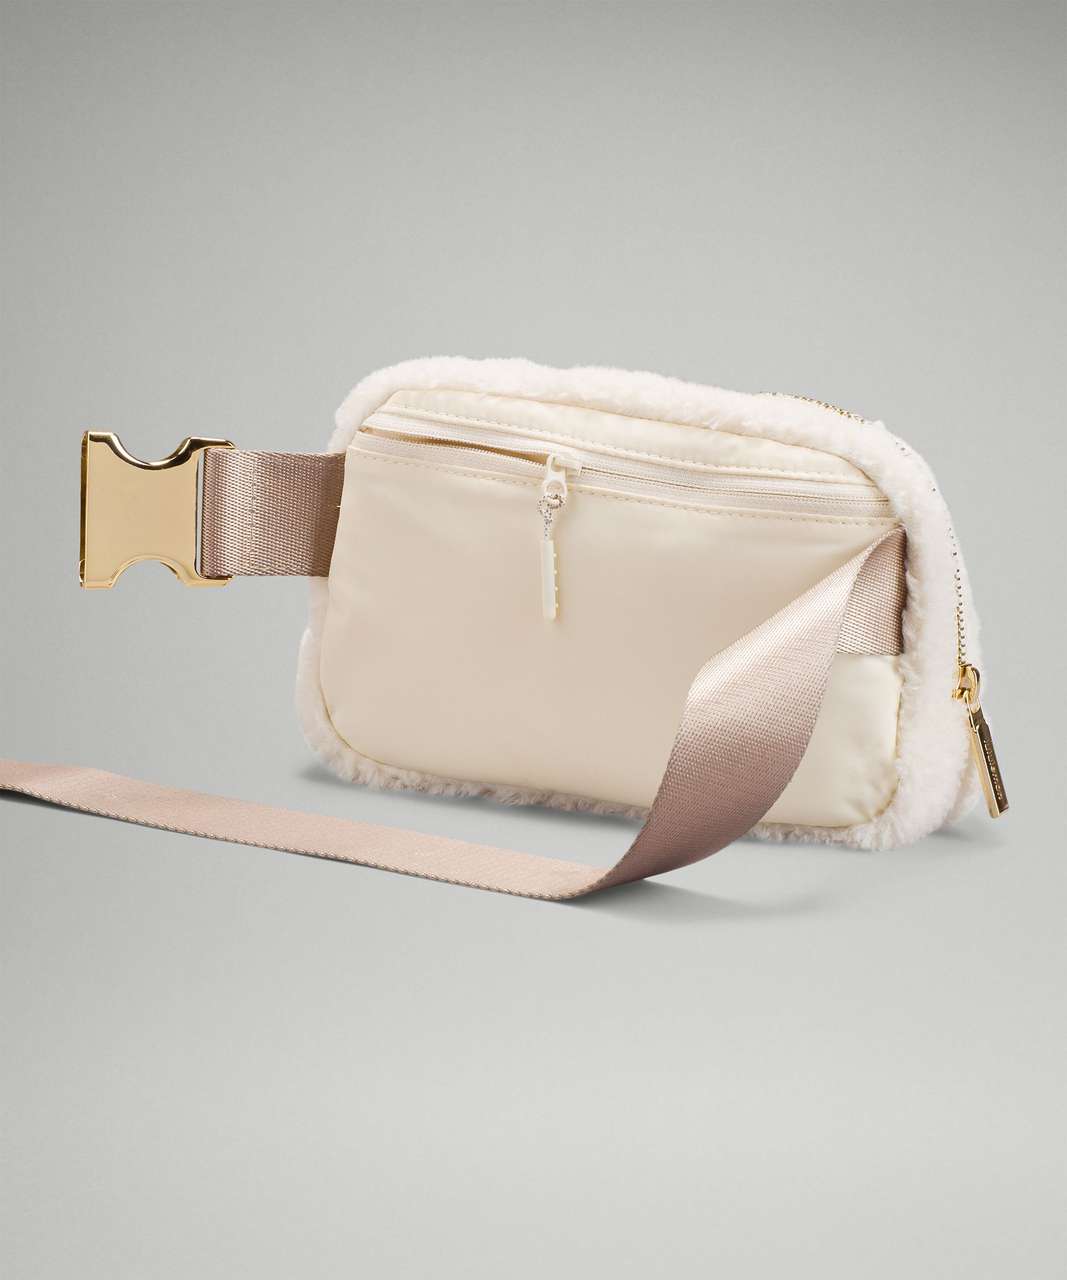 Lululemon Everywhere Fleece Belt Bag - Light Ivory